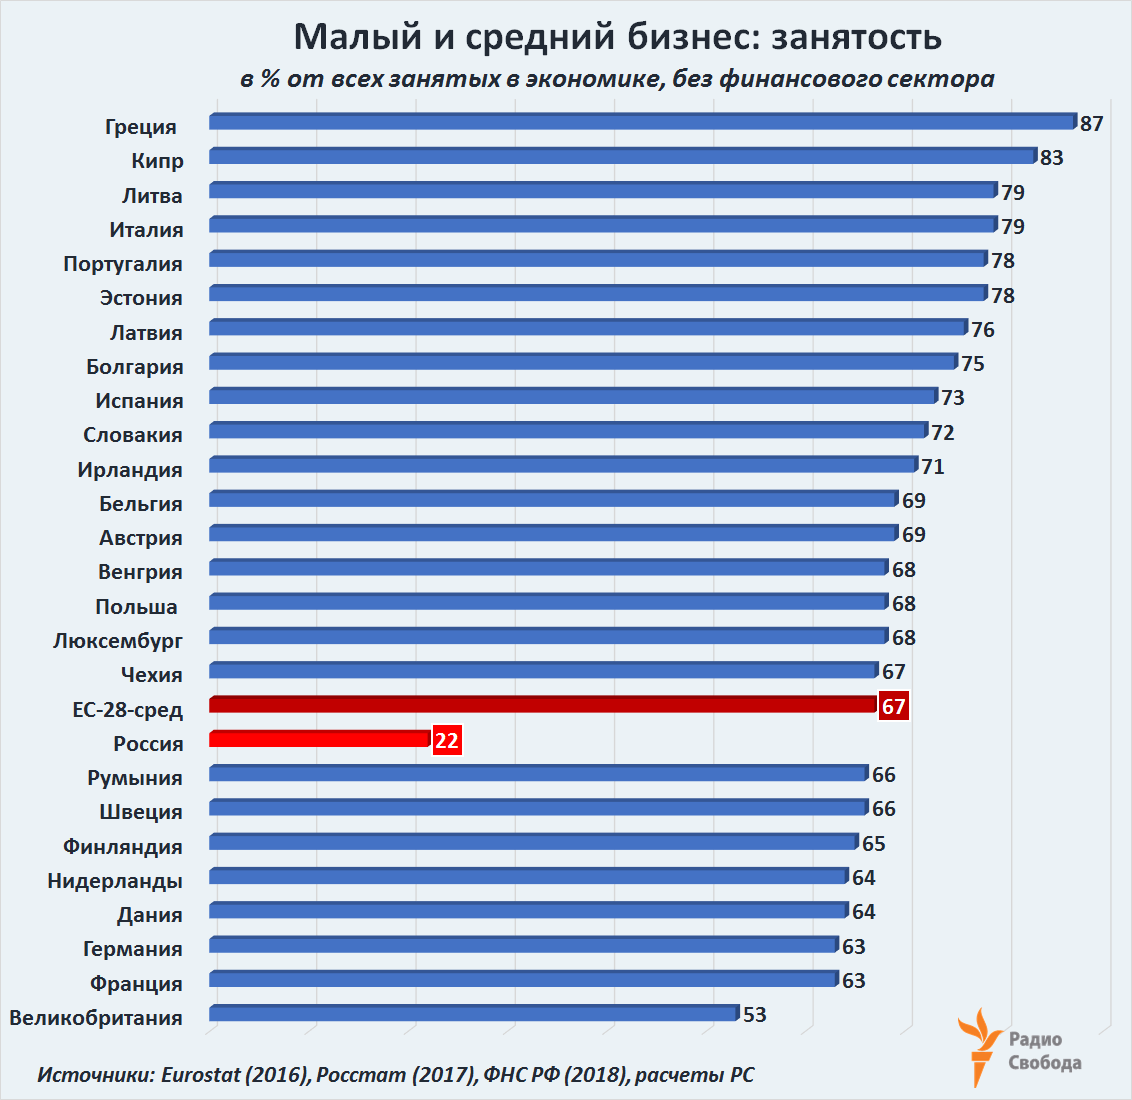 Russia-Factograph-SME-Employment-Share-EU-Russia